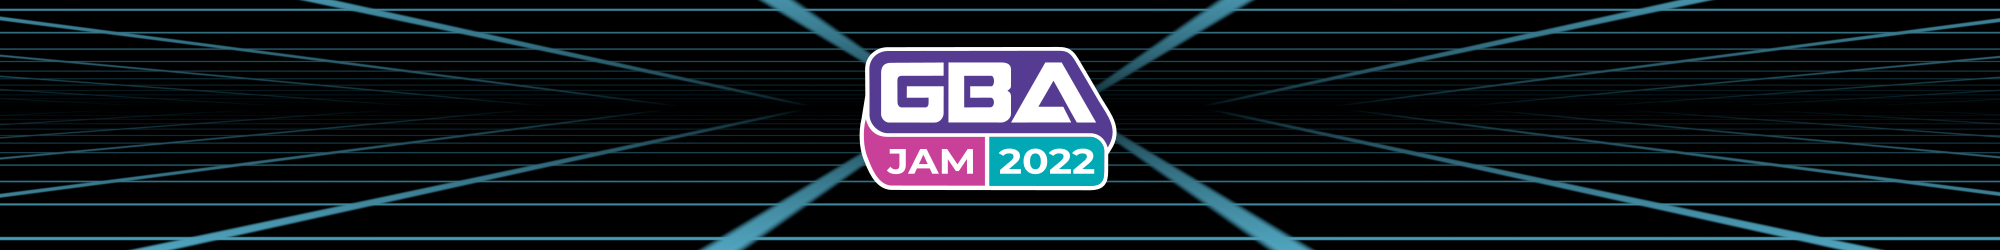 GBA Jam 2022 Invitro